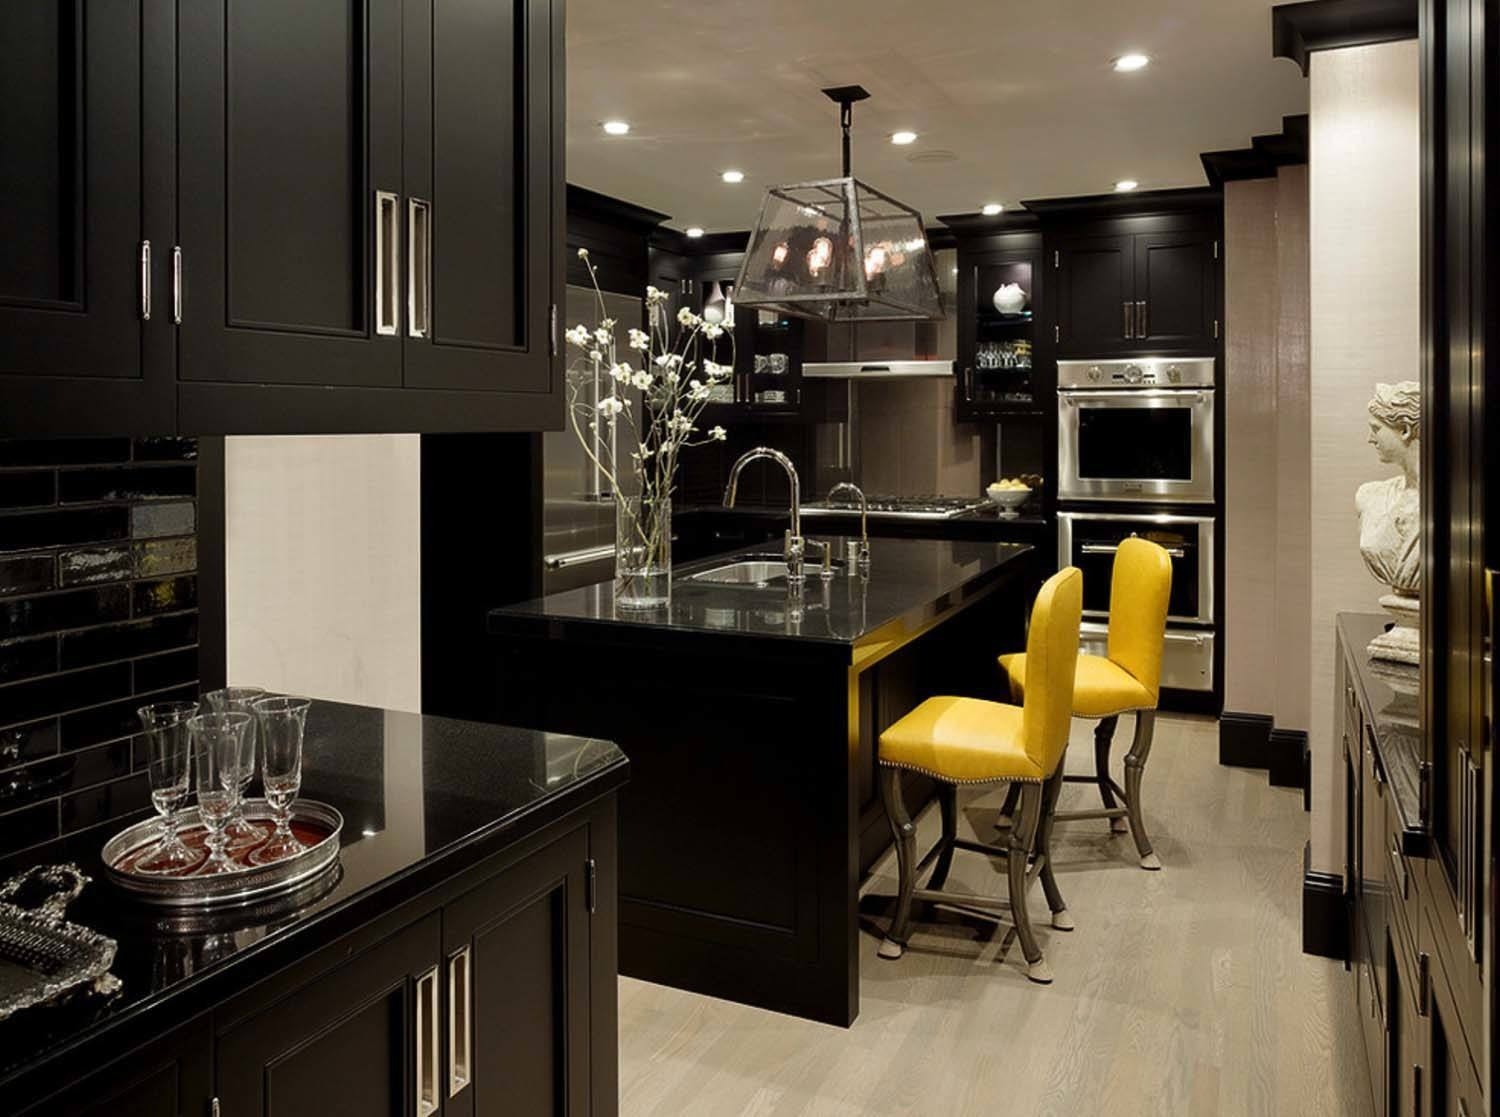 Best ideas about Dark Kitchen Ideas
. Save or Pin 43 Dramatic black kitchens that make a bold statement Now.